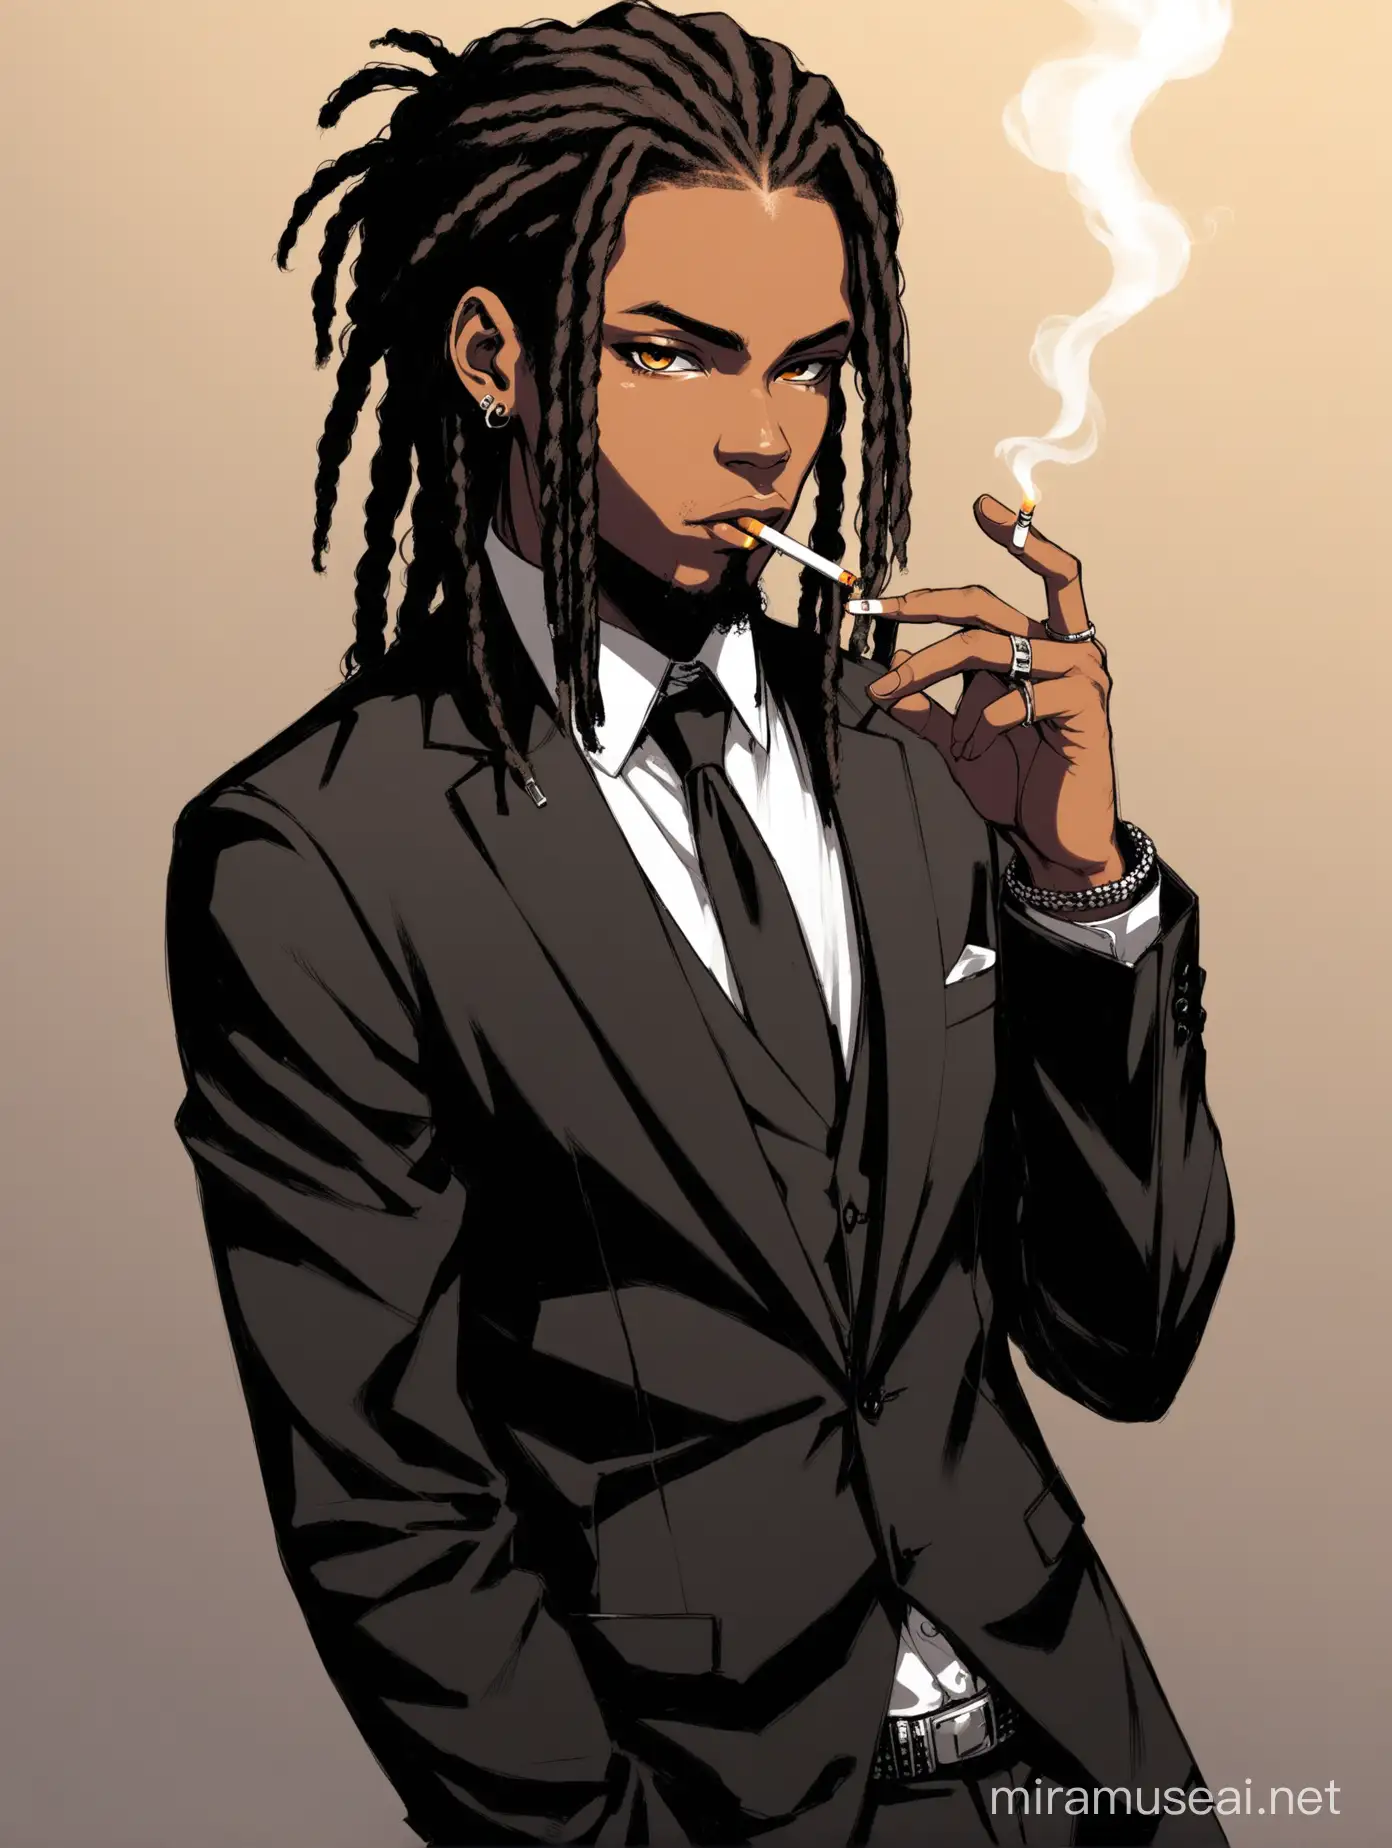 Stylish Melanesian Gangster with Dreadlocks Smoking Cigarette in Black Suit